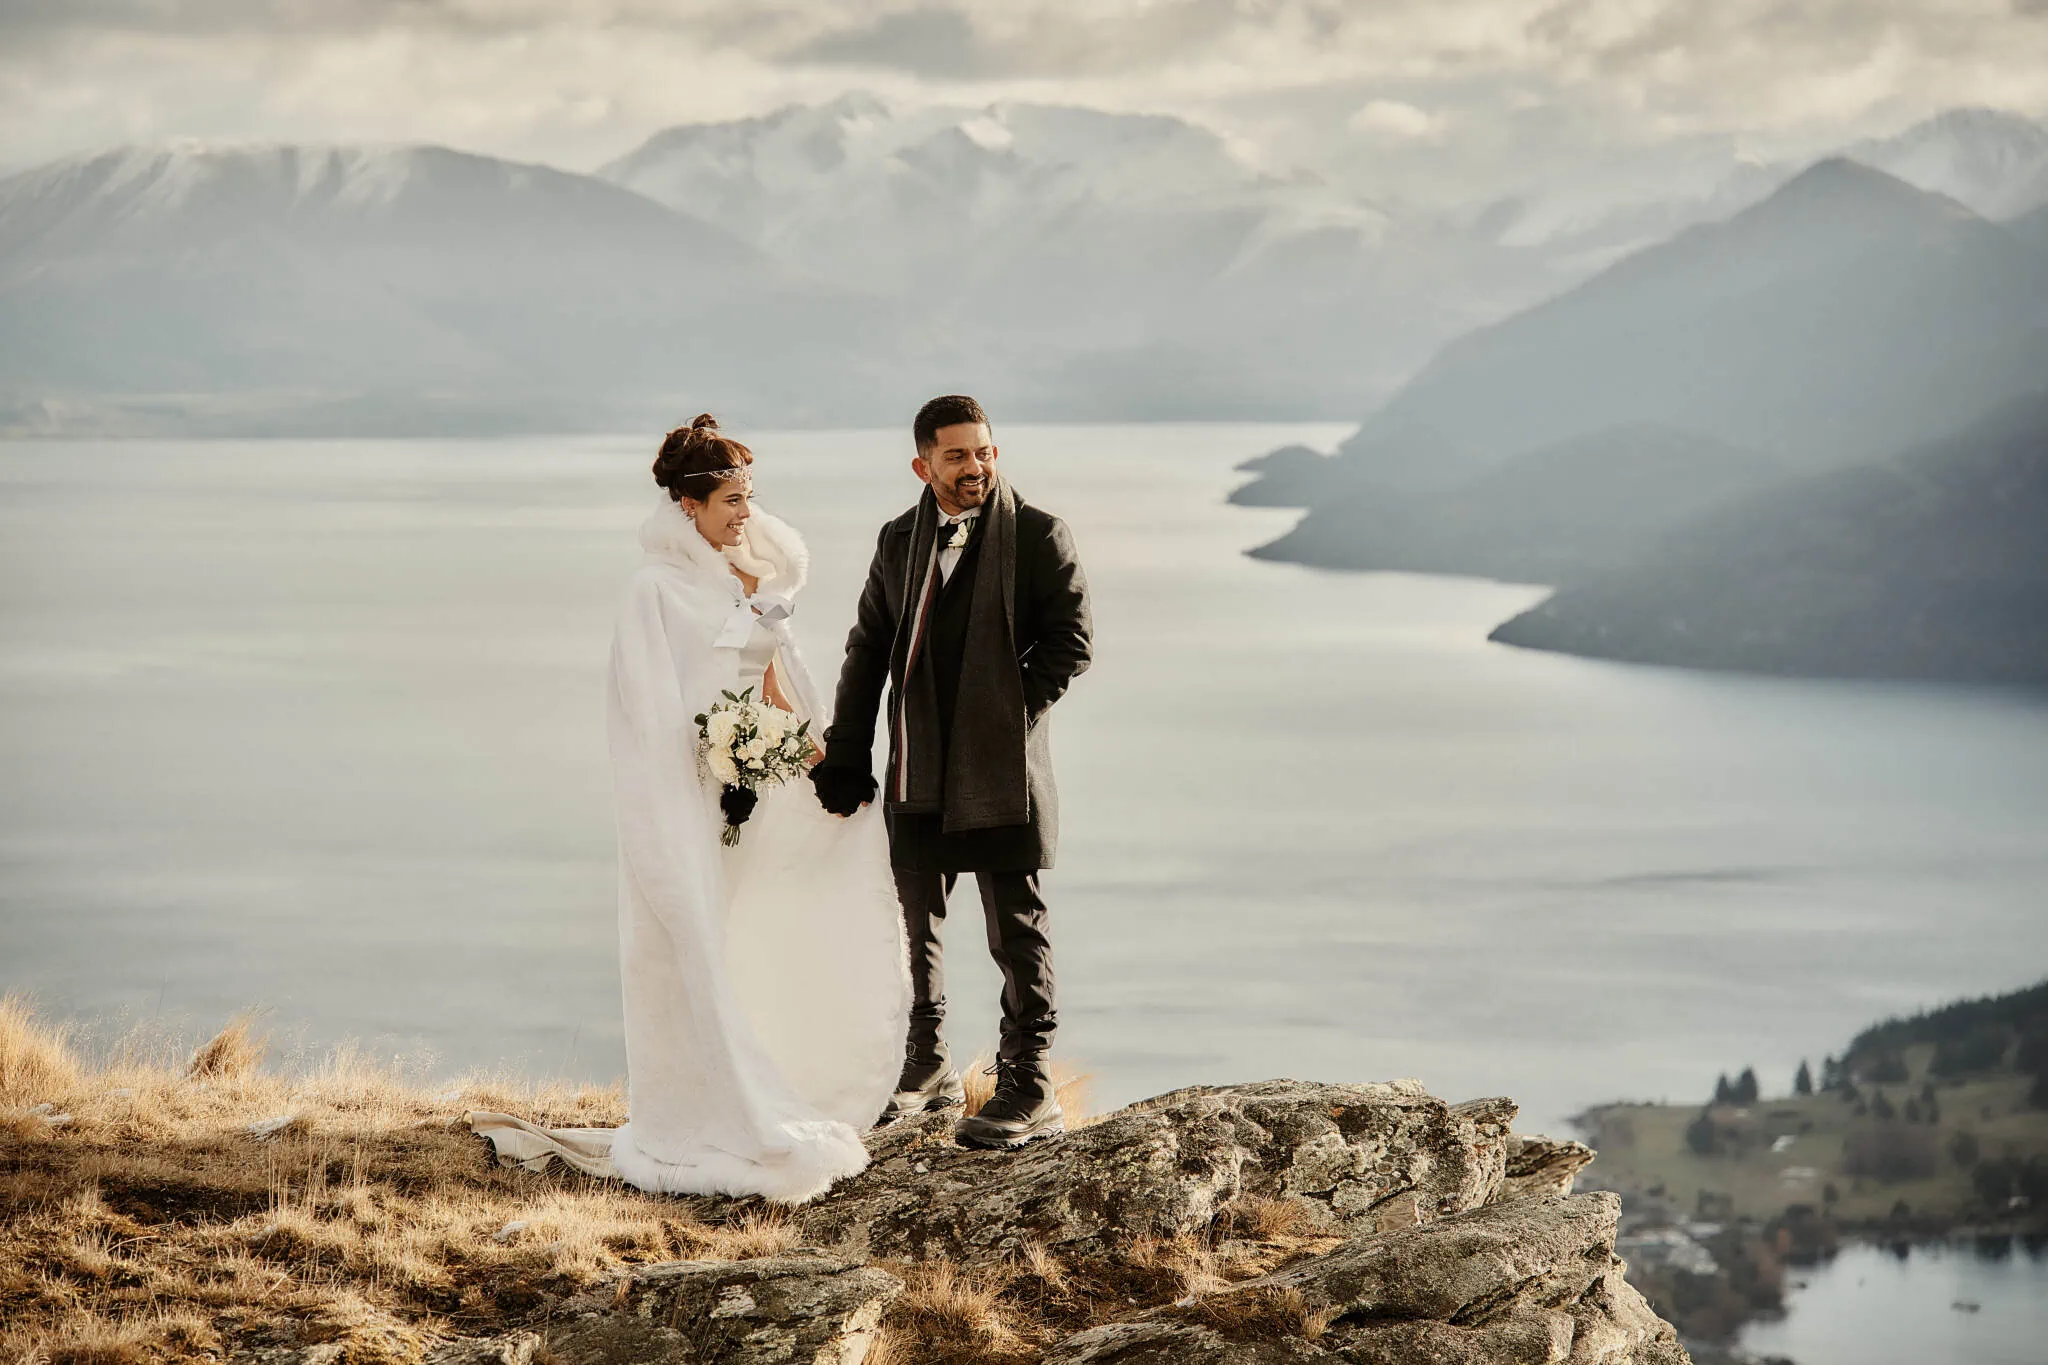 Queenstown New Zealand Elopement Wedding Photographer - Wasim and Yumn's Queenstown Islamic wedding on top of a mountain, overlooking Lake Wanaka.